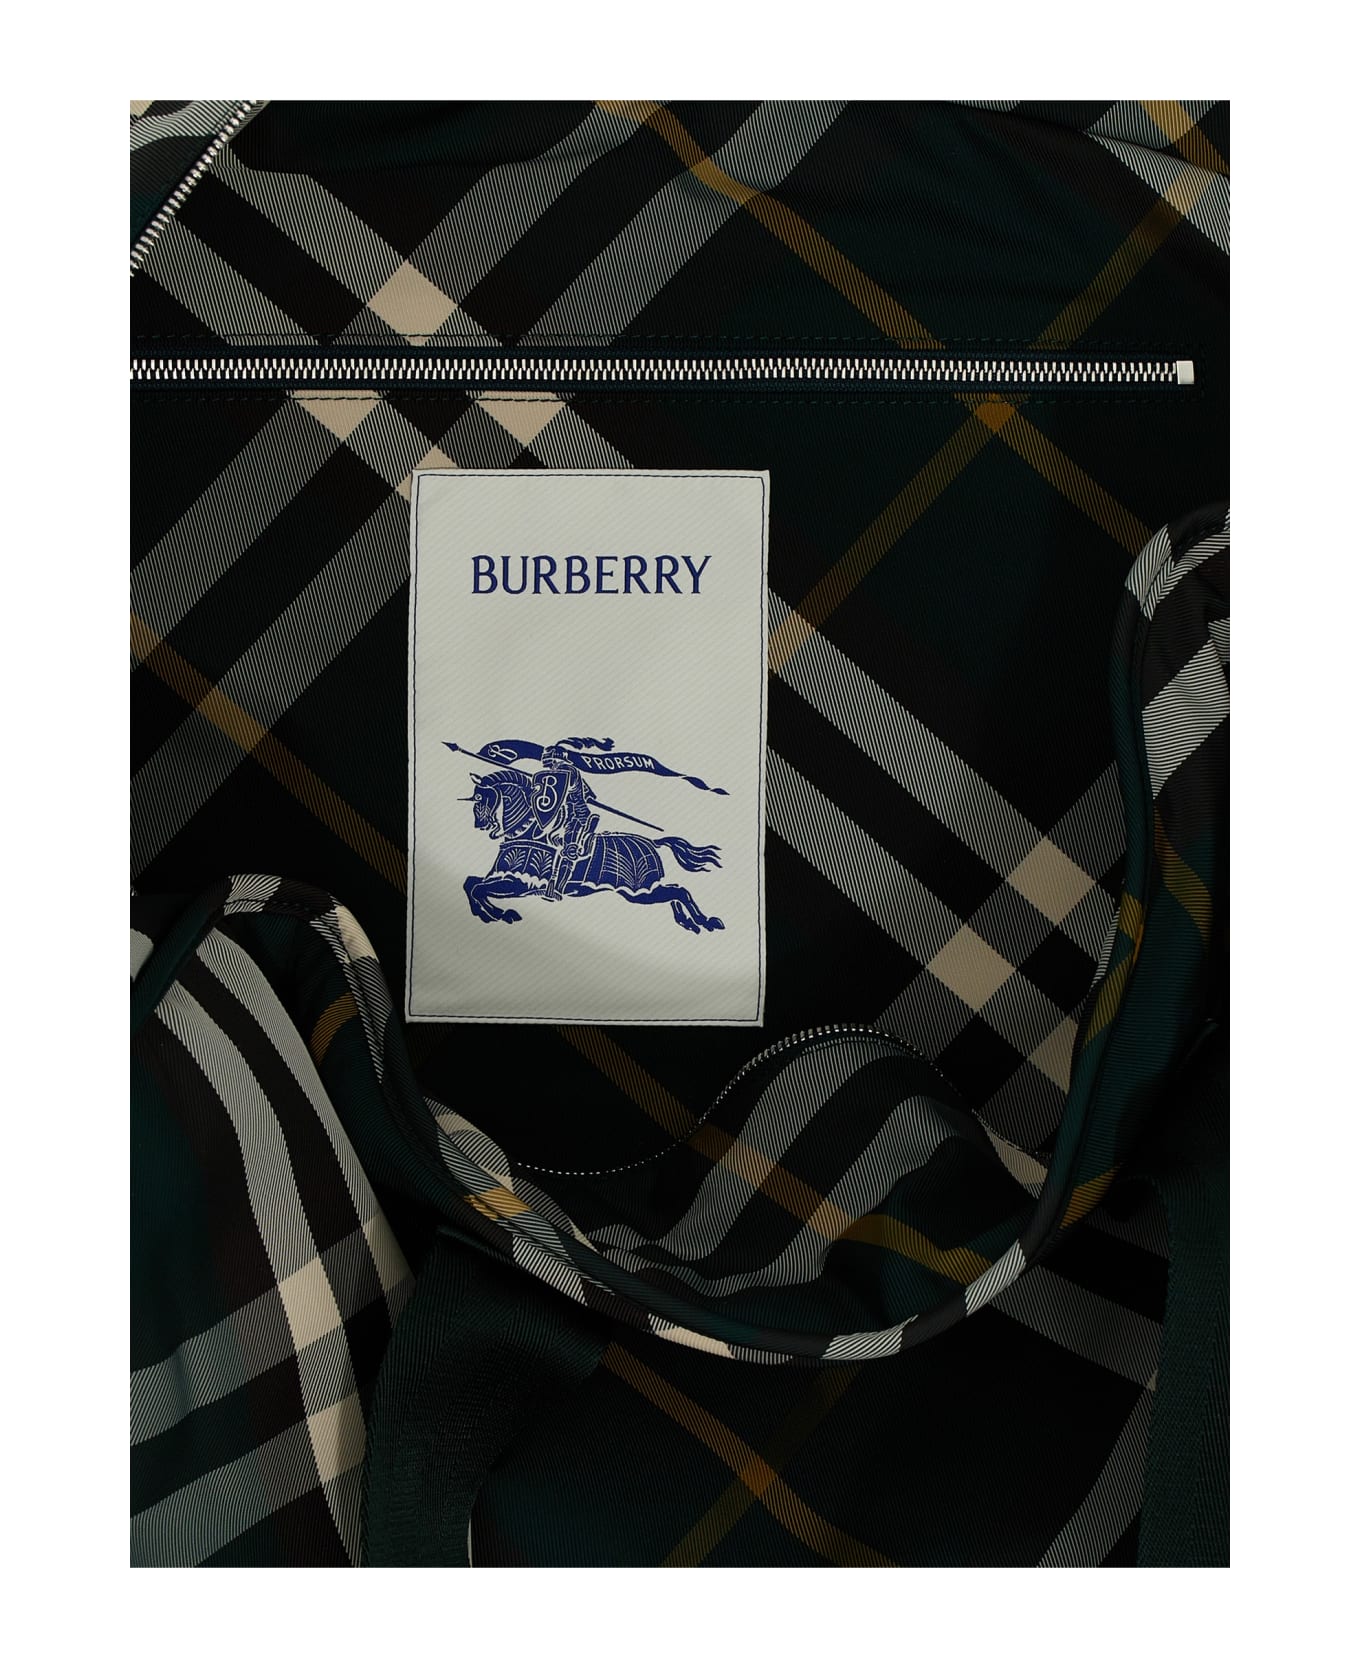 Burberry 'shield' Large Travel Bag - Green